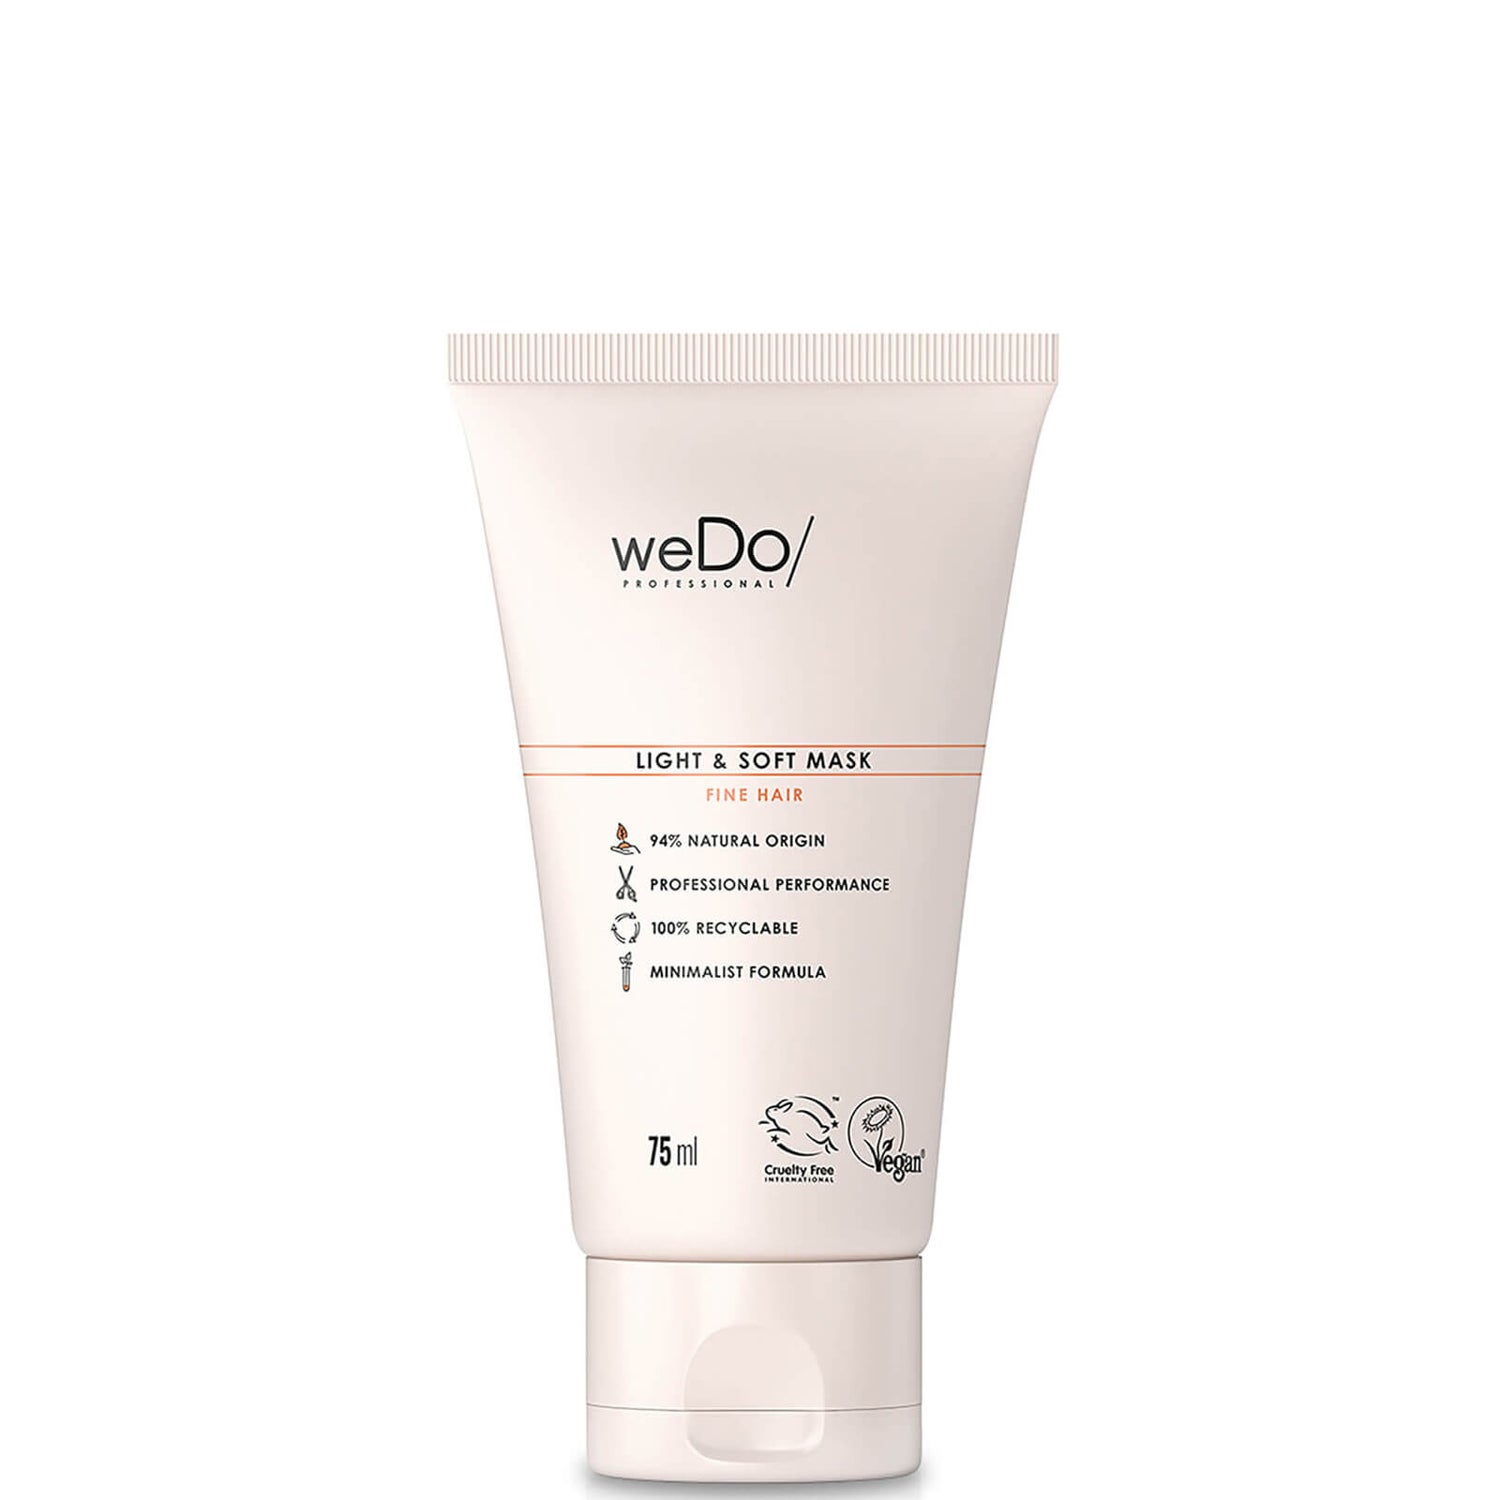 weDo/ Professional Light & Soft Mask 75 ml